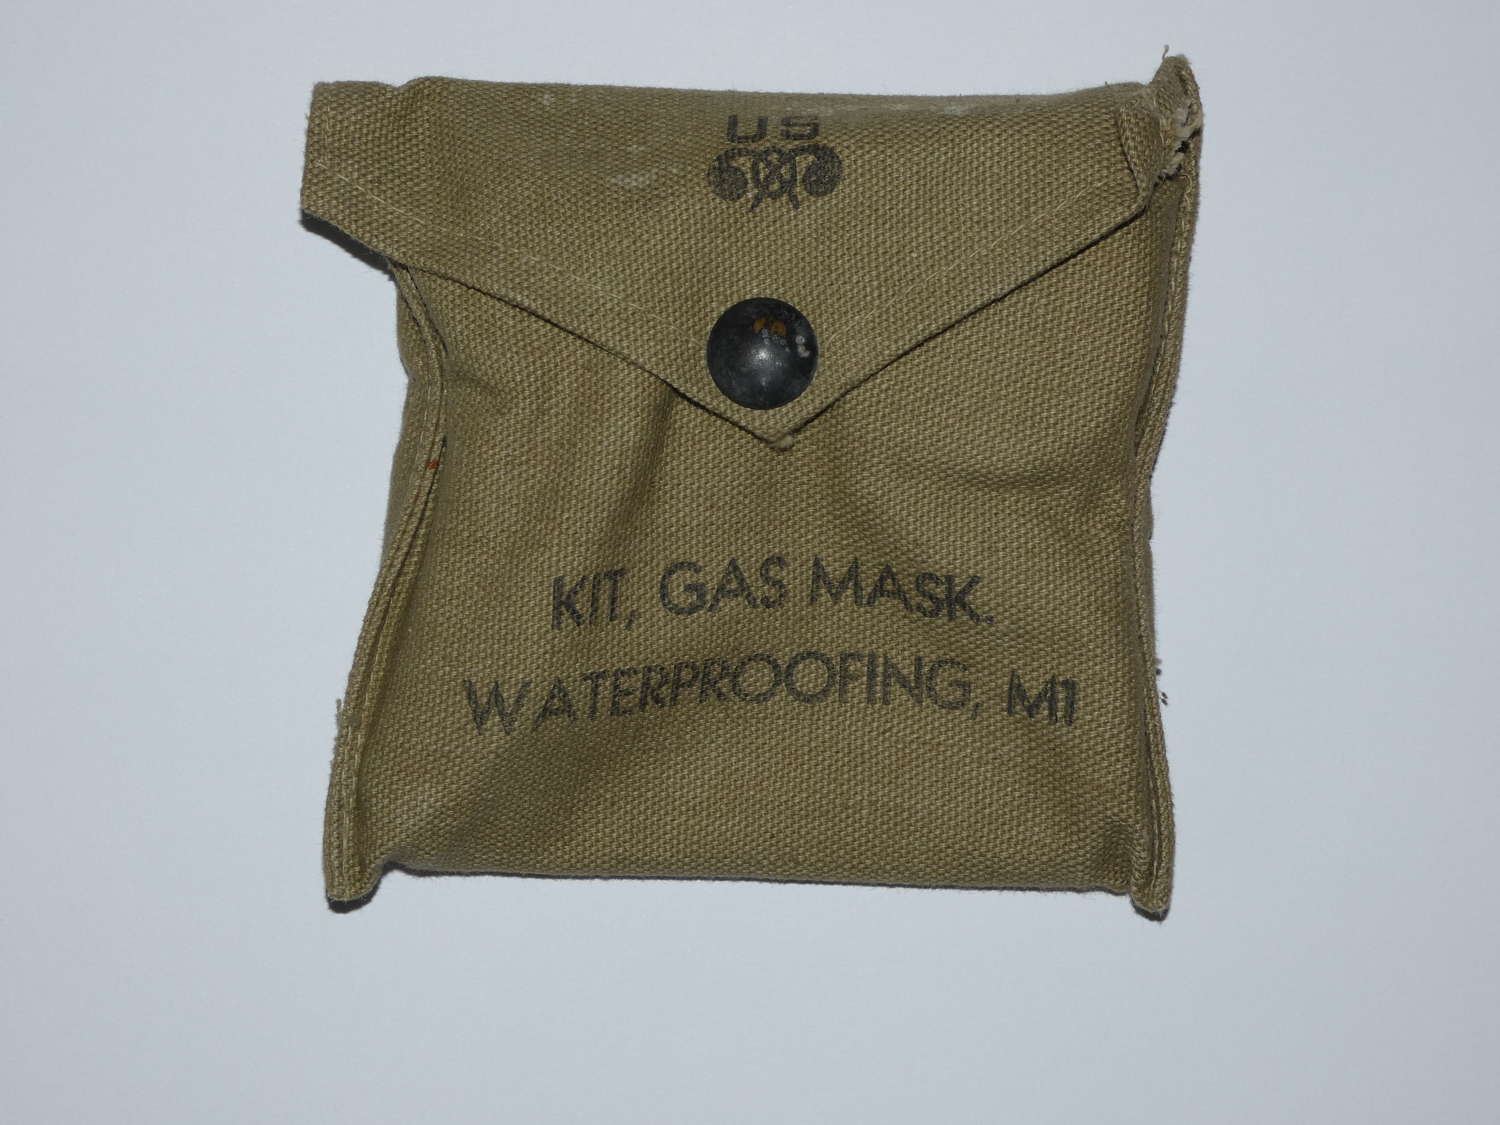 WW2 U.S. Army M1 Gas Mask Waterproof Kit